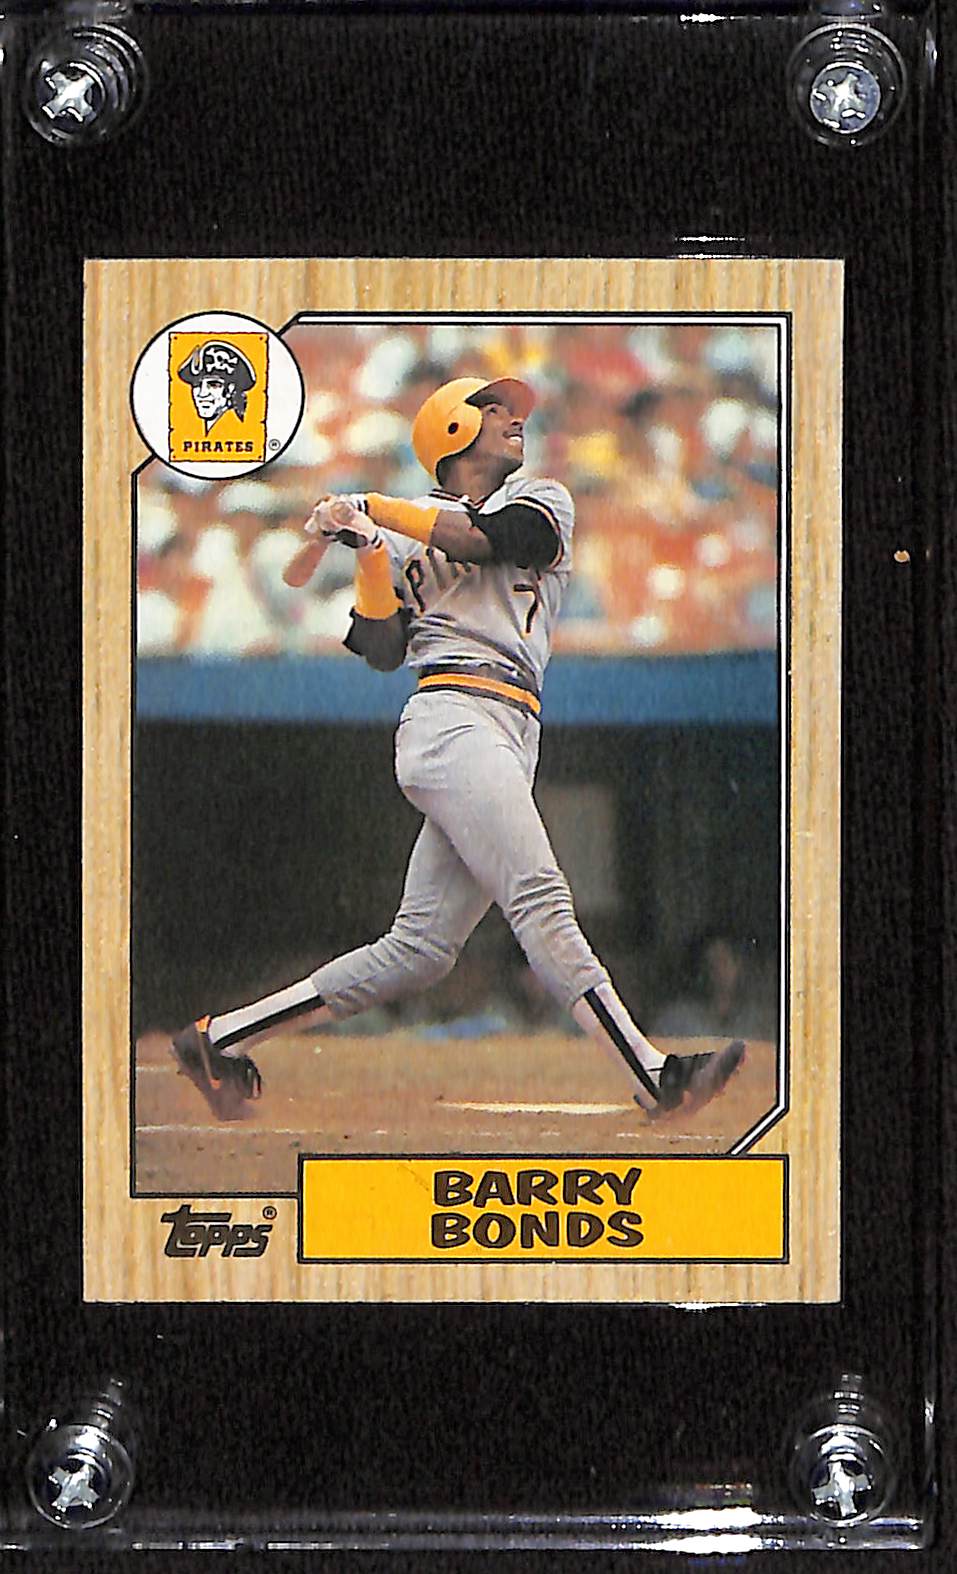 FIINR Baseball Card 1987 Topps Barry Bonds Rookie Error Card - #320 - Over 6 Errors - Very Rare - Mint Condition